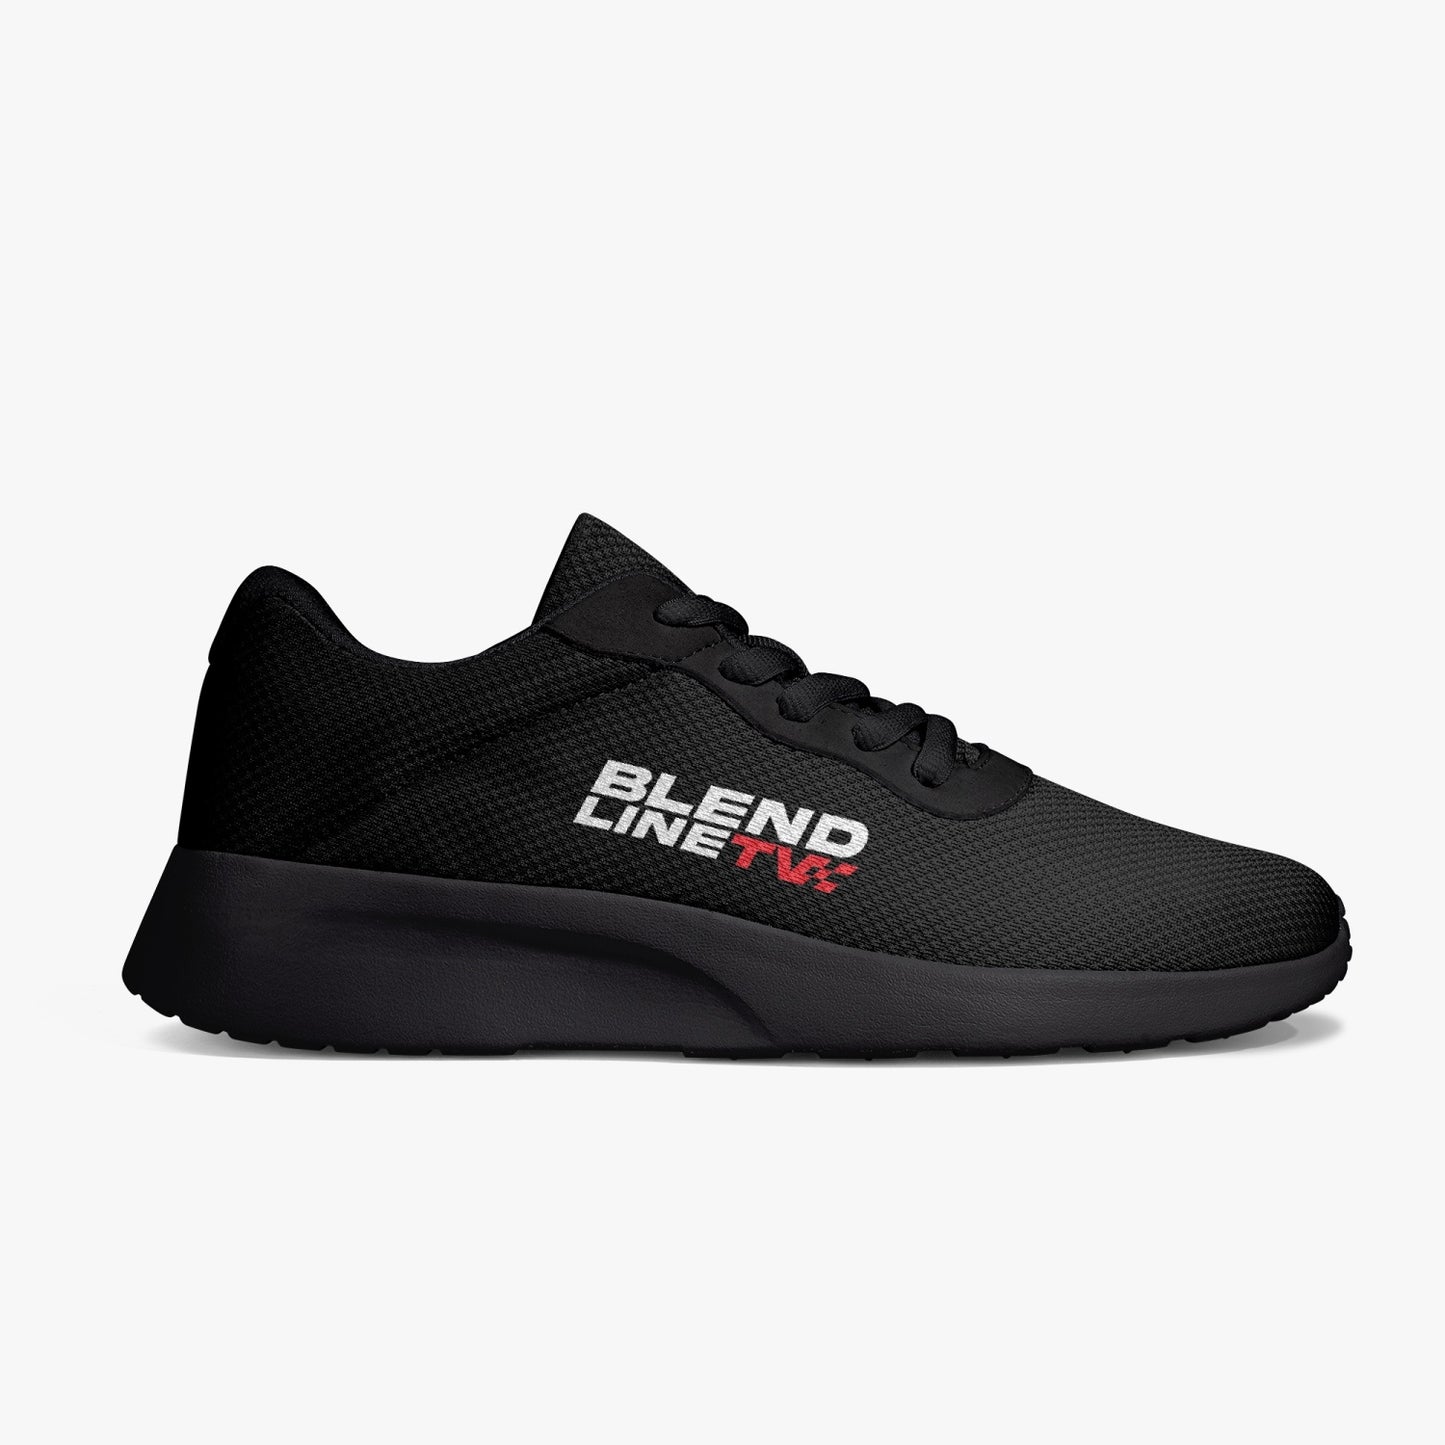 BLENDLINE TV pit lane mesh shoe - carbon